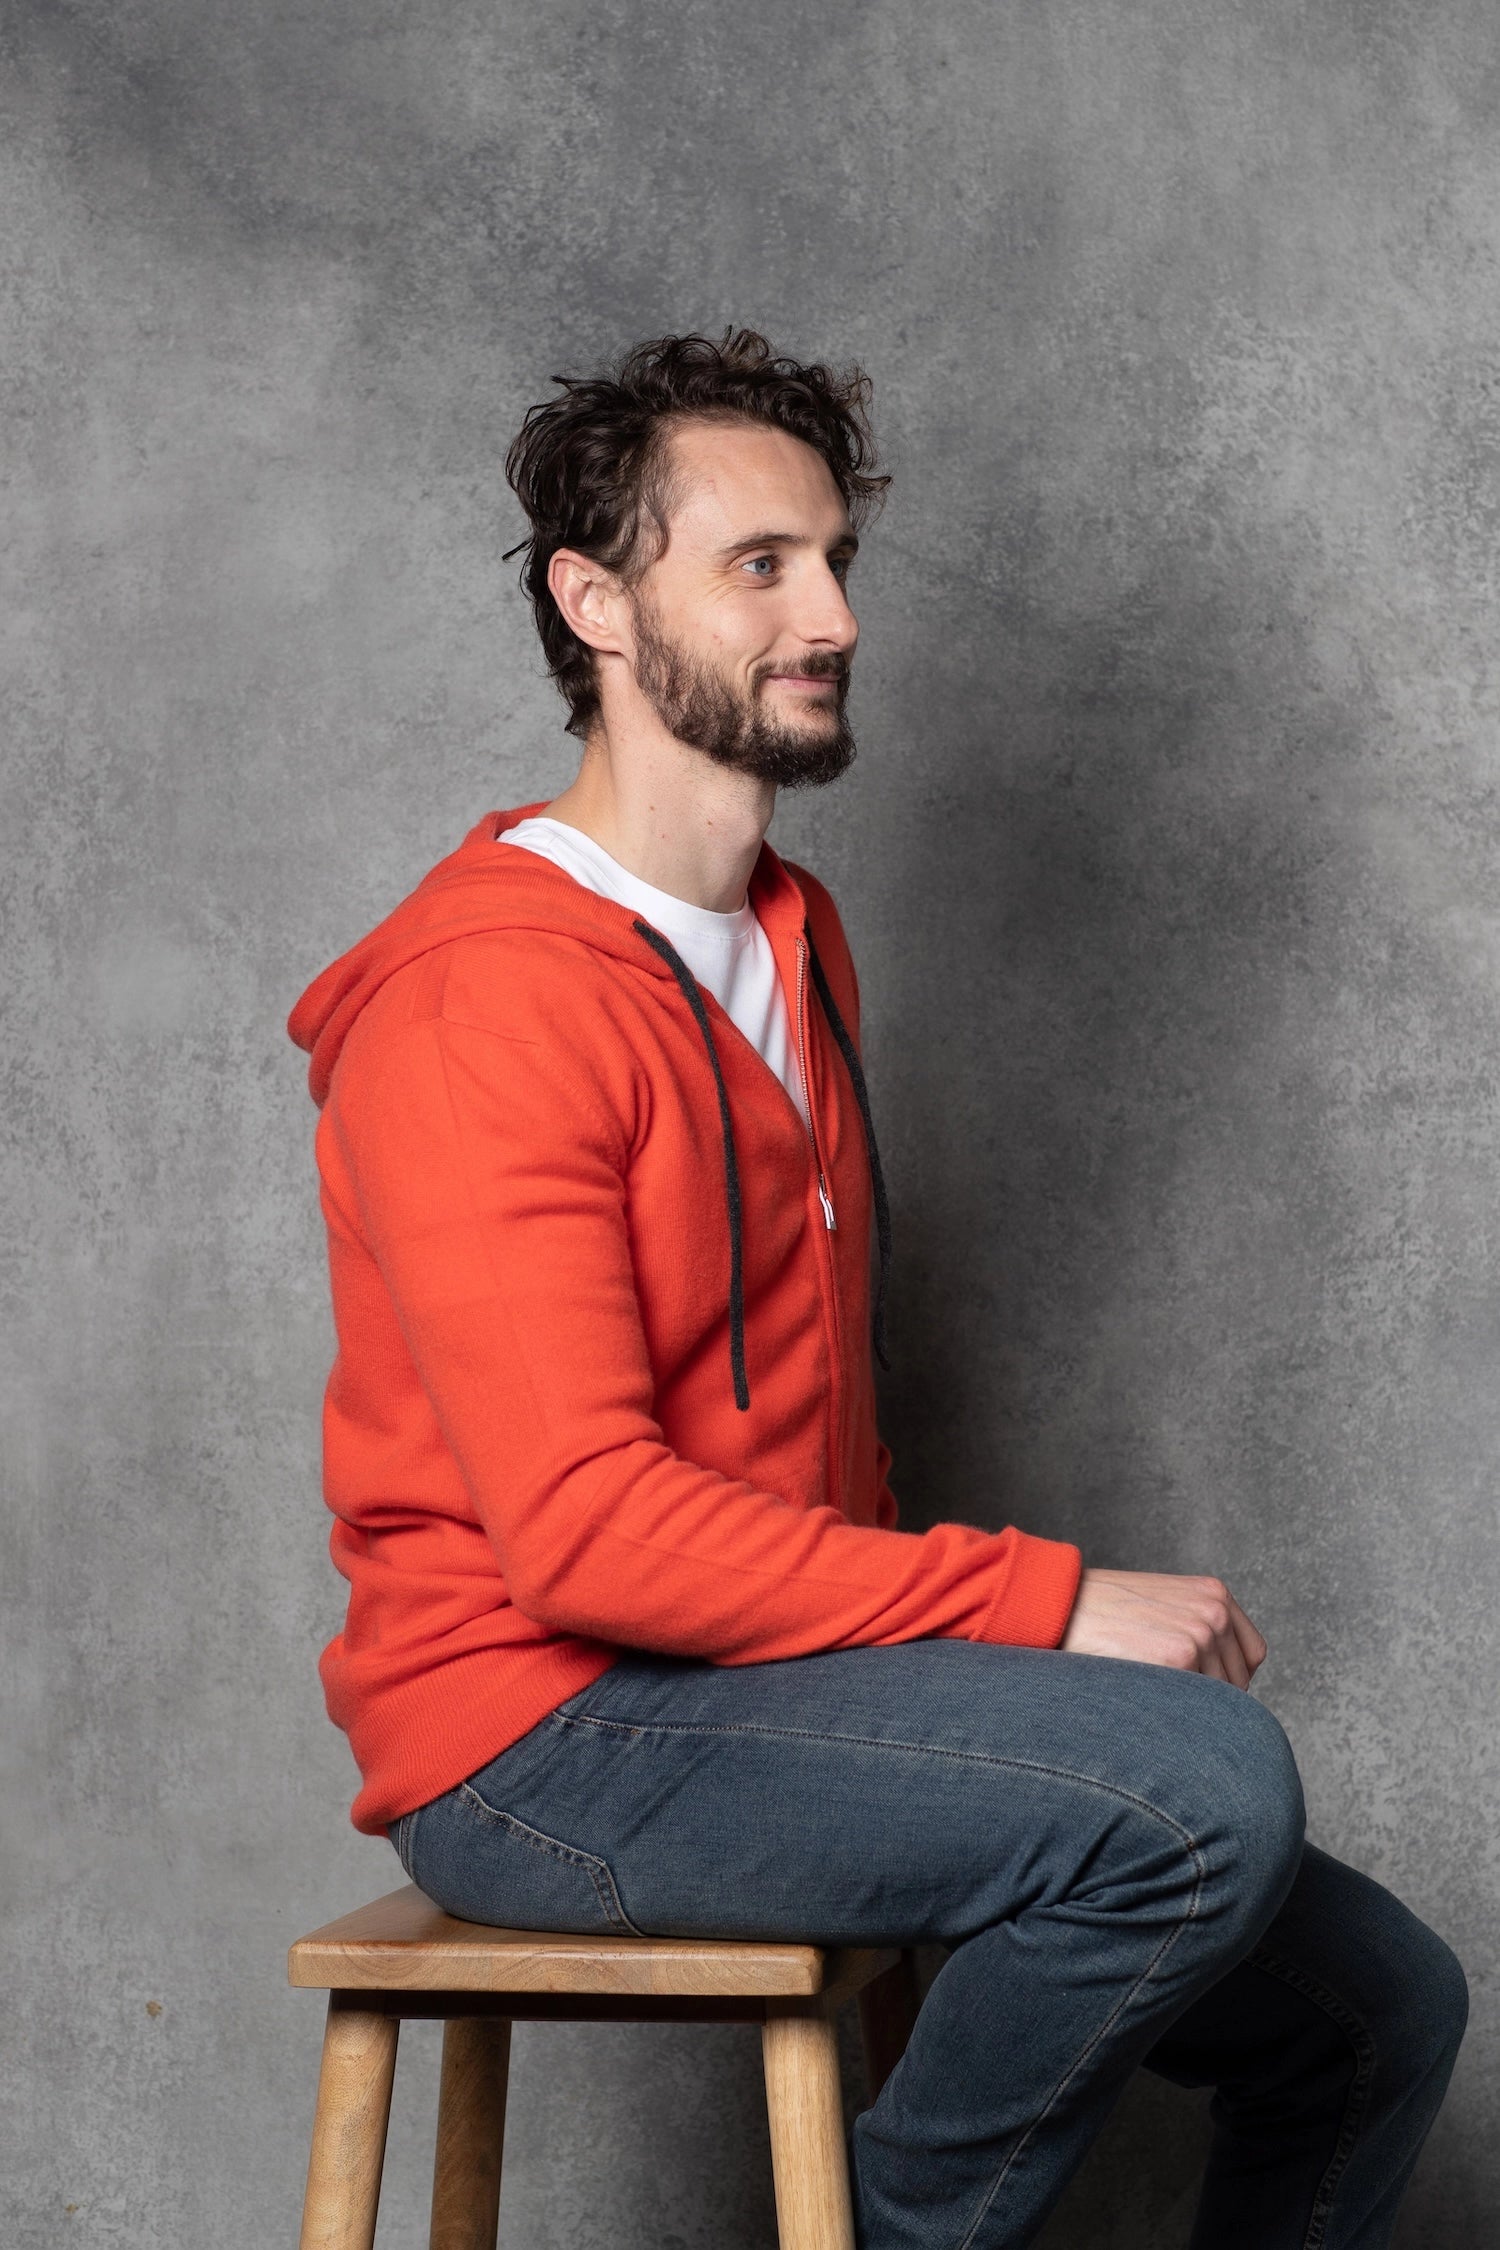 Men's luxury cashmere hoodie sweater in orange